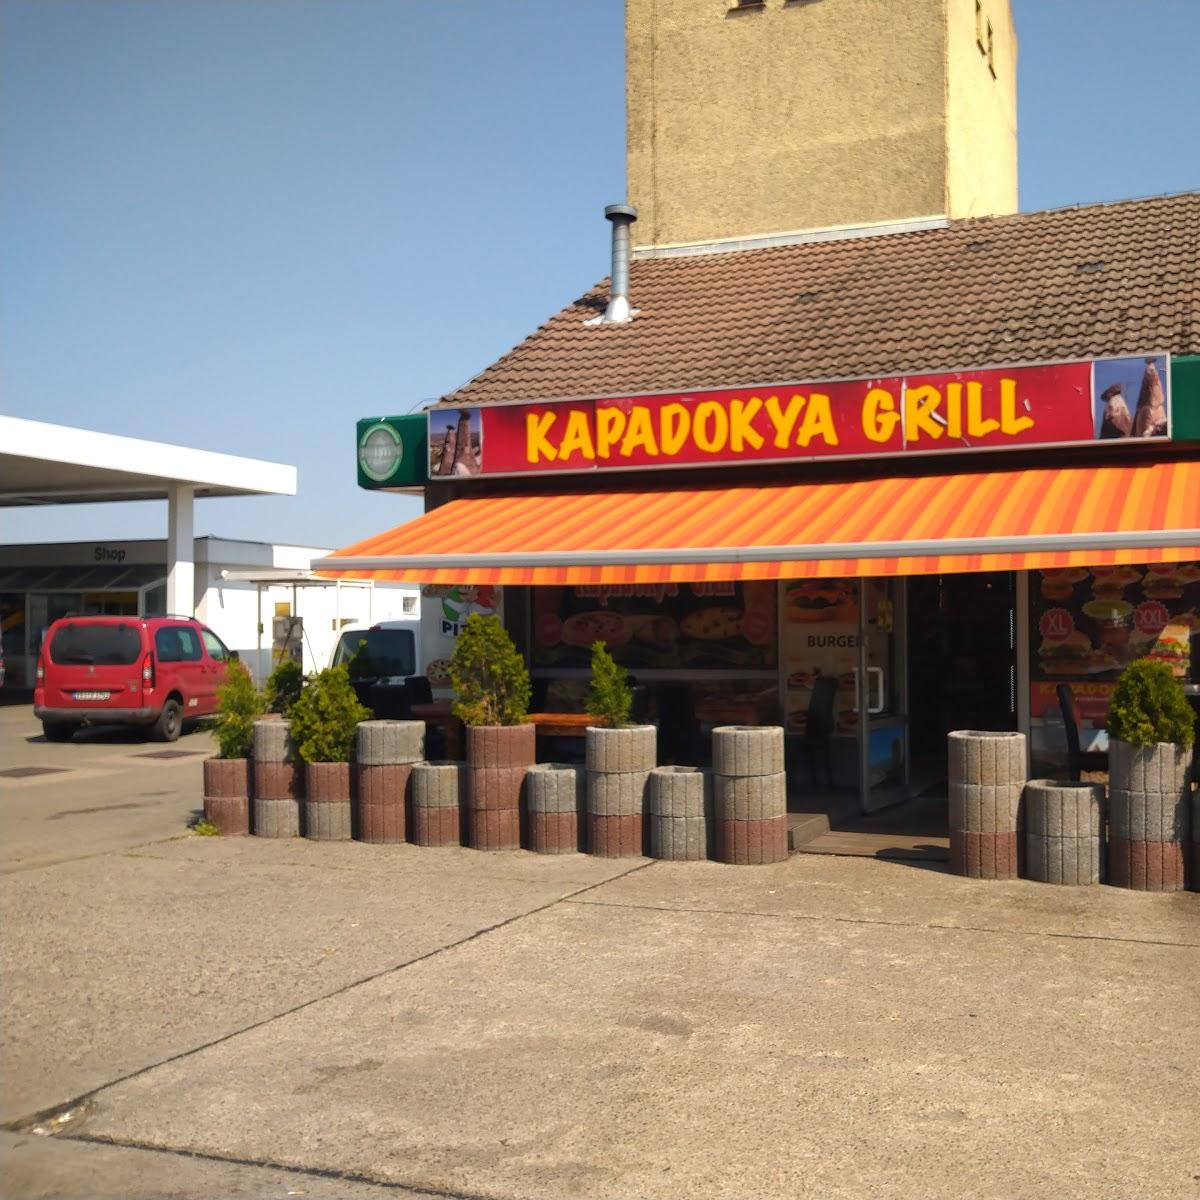 Restaurant "Kapadokya Grill" in Pasewalk